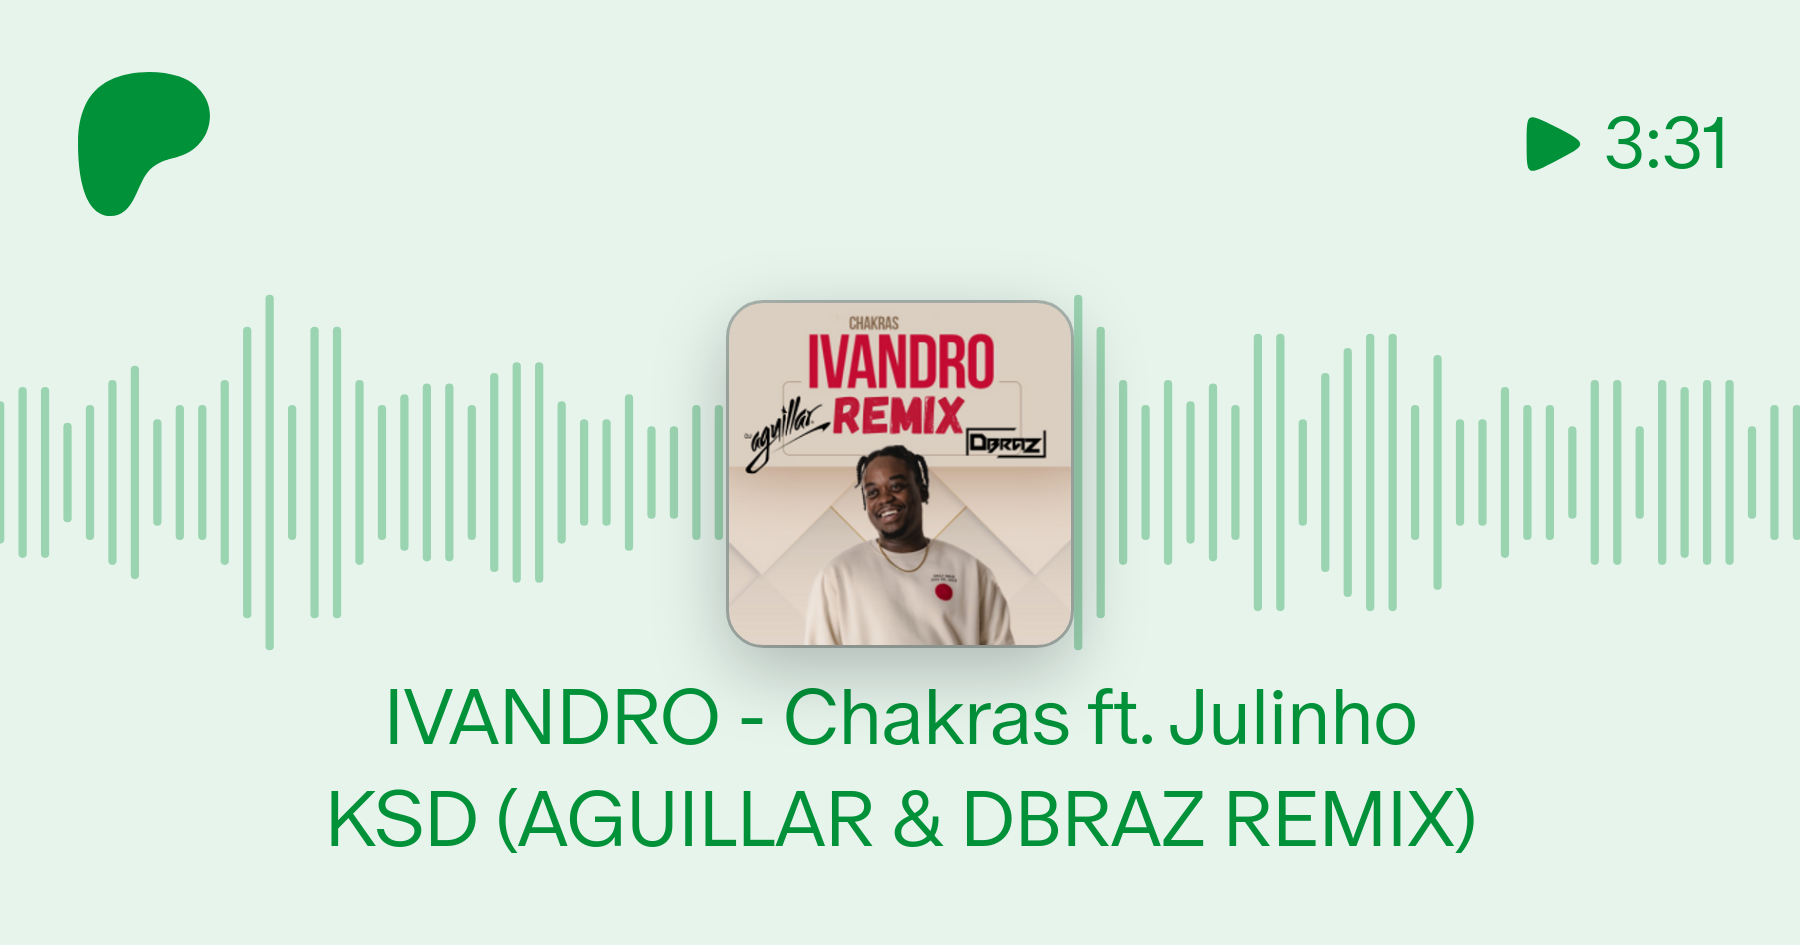 IVANDRO - Chakras ft. Julinho KSD (AGUILLAR & DBRAZ REMIX)